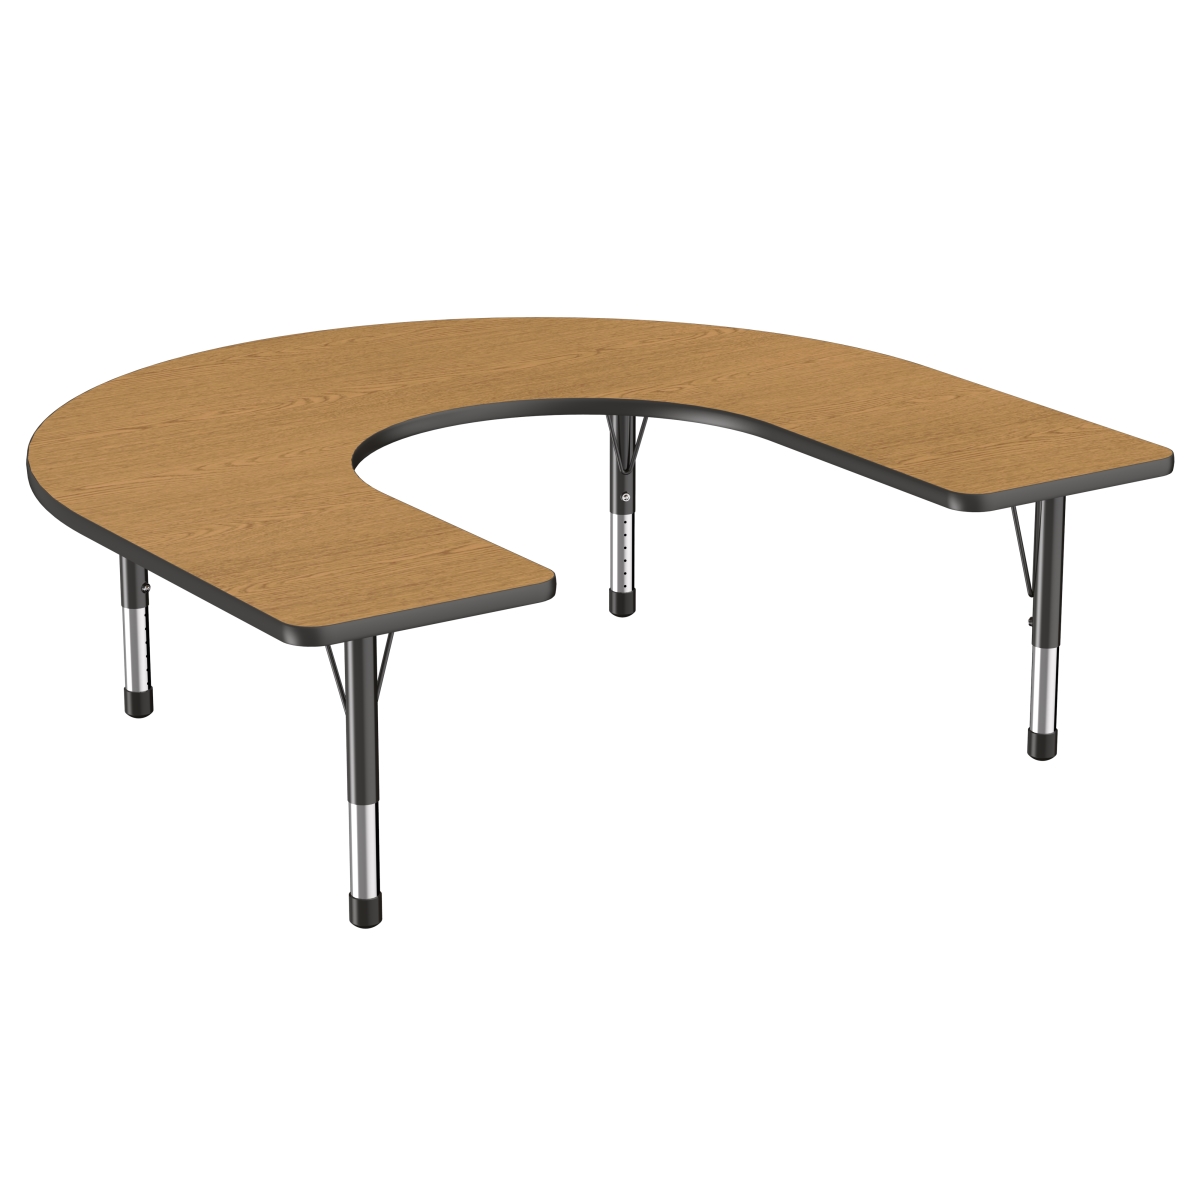 10095-okbk 60 X 66 In. Horseshoe T-mold Adjustable Activity Table With Chunky Leg - Oak & Black